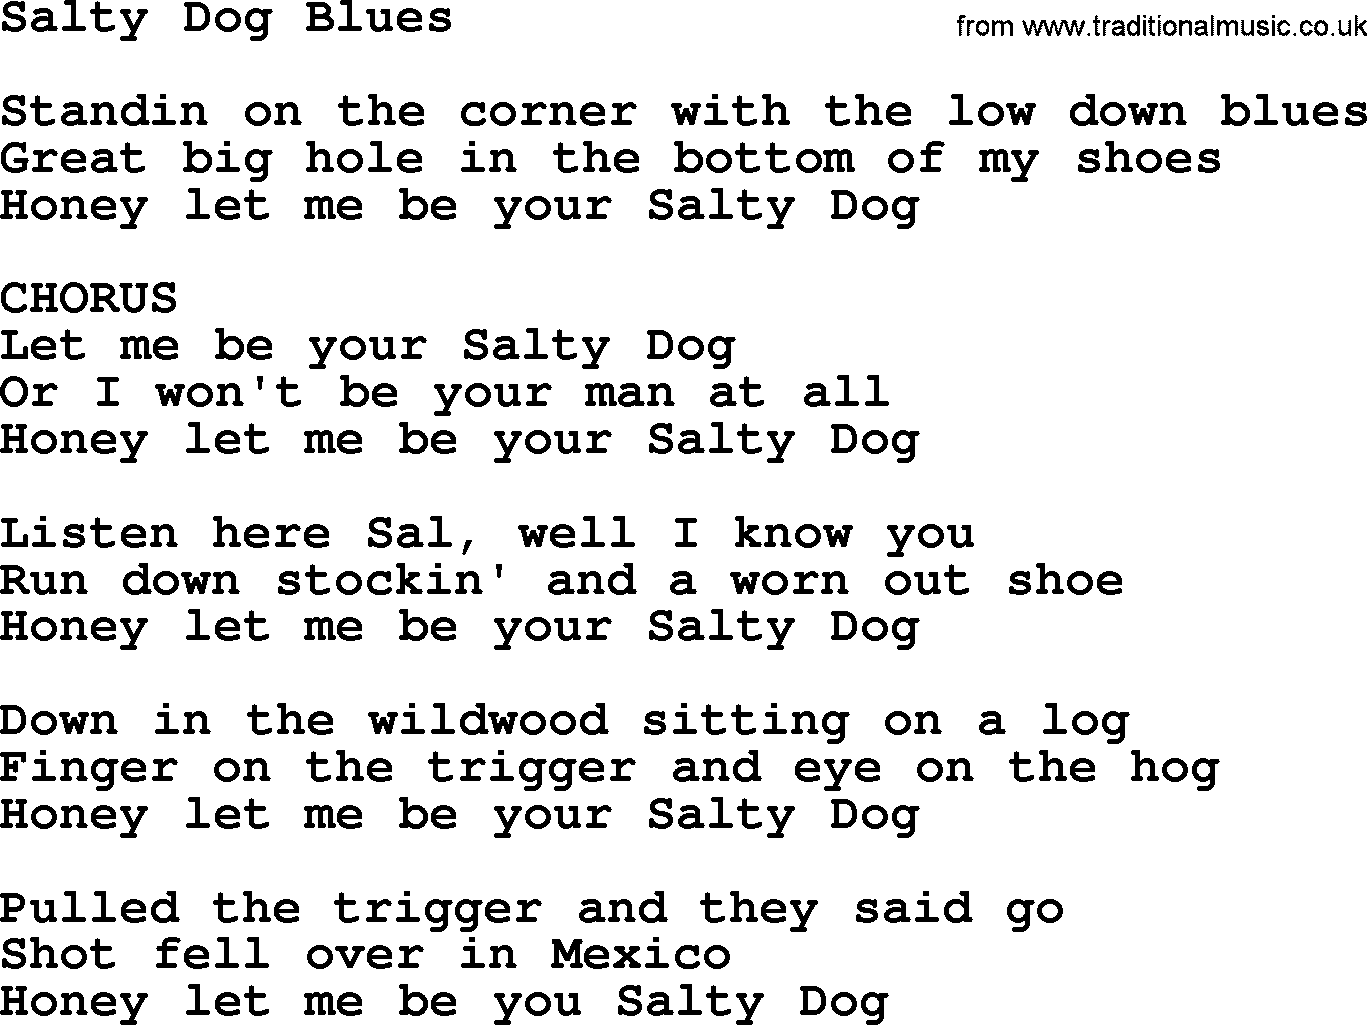 The Byrds song Salty Dog Blues, lyrics